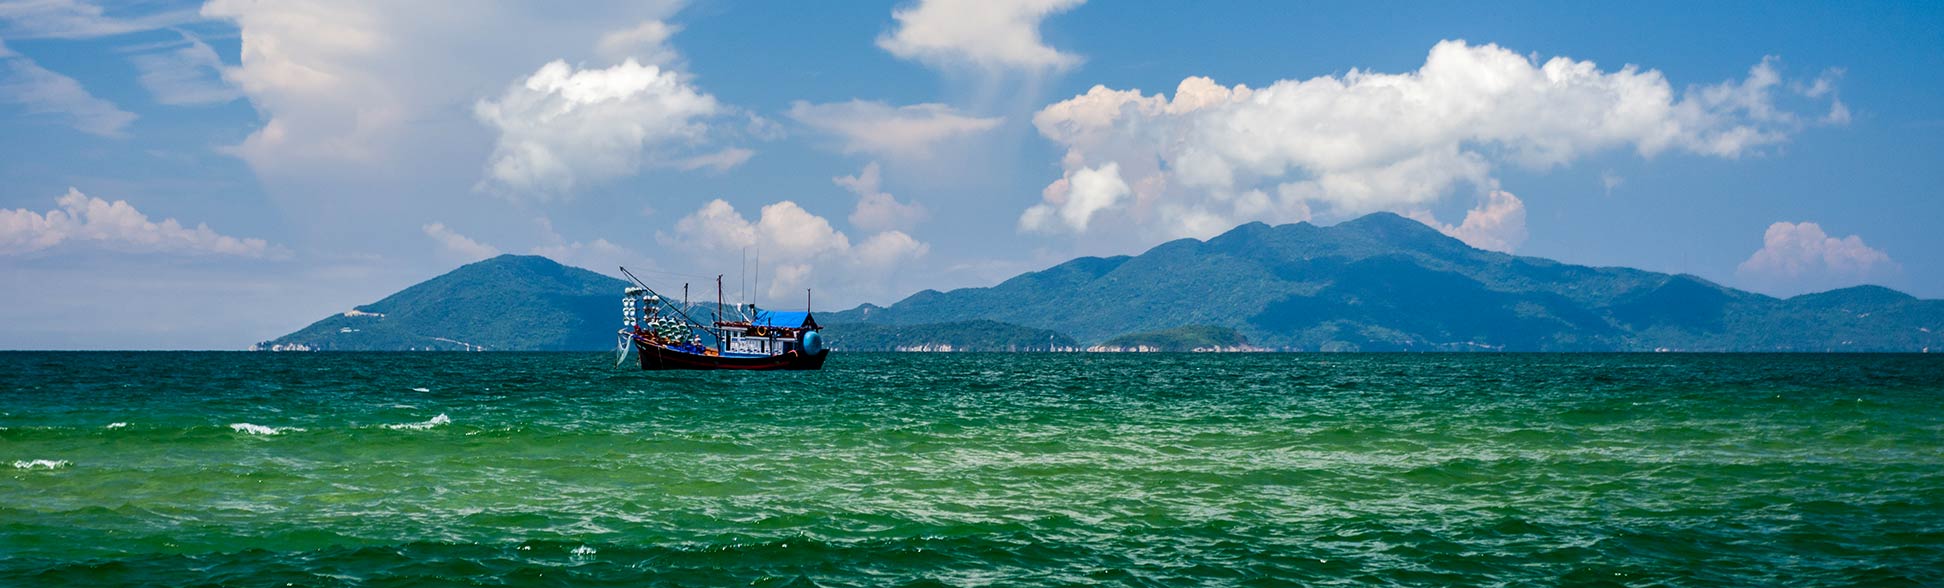 Vietnamese fishing boat on the South China Sea